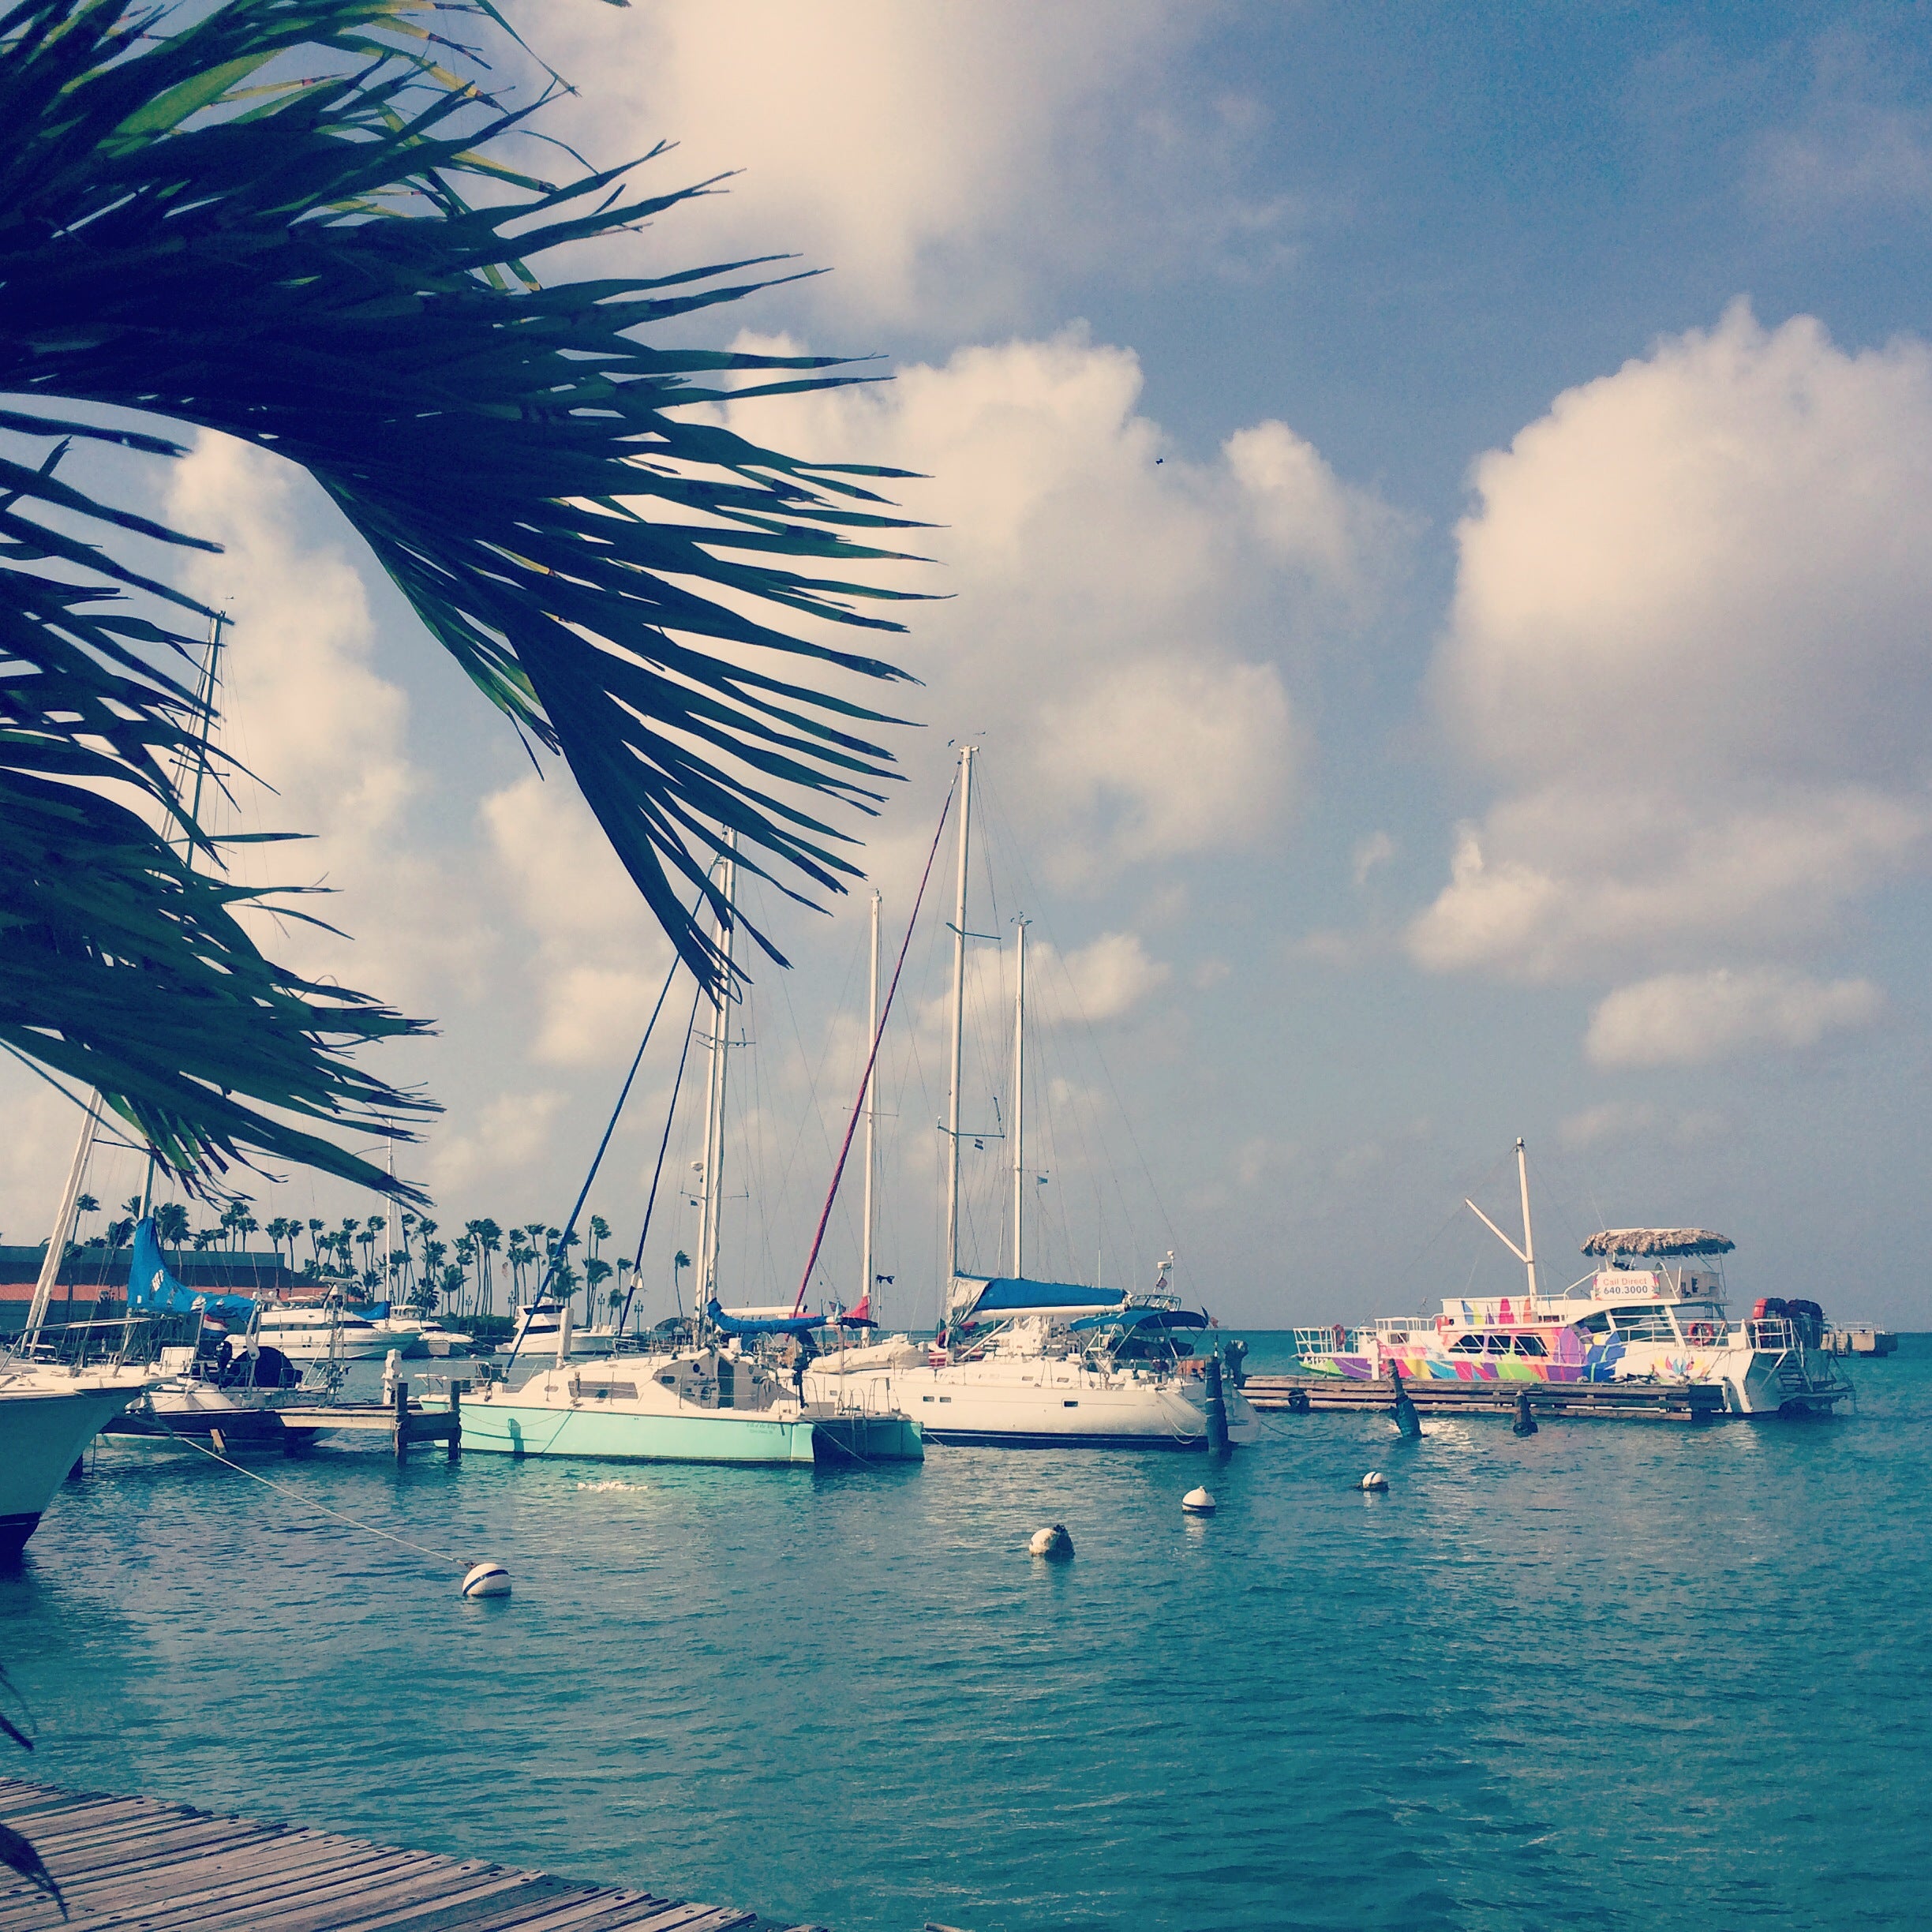 Boat Dock Aruba by KARMA for a cure